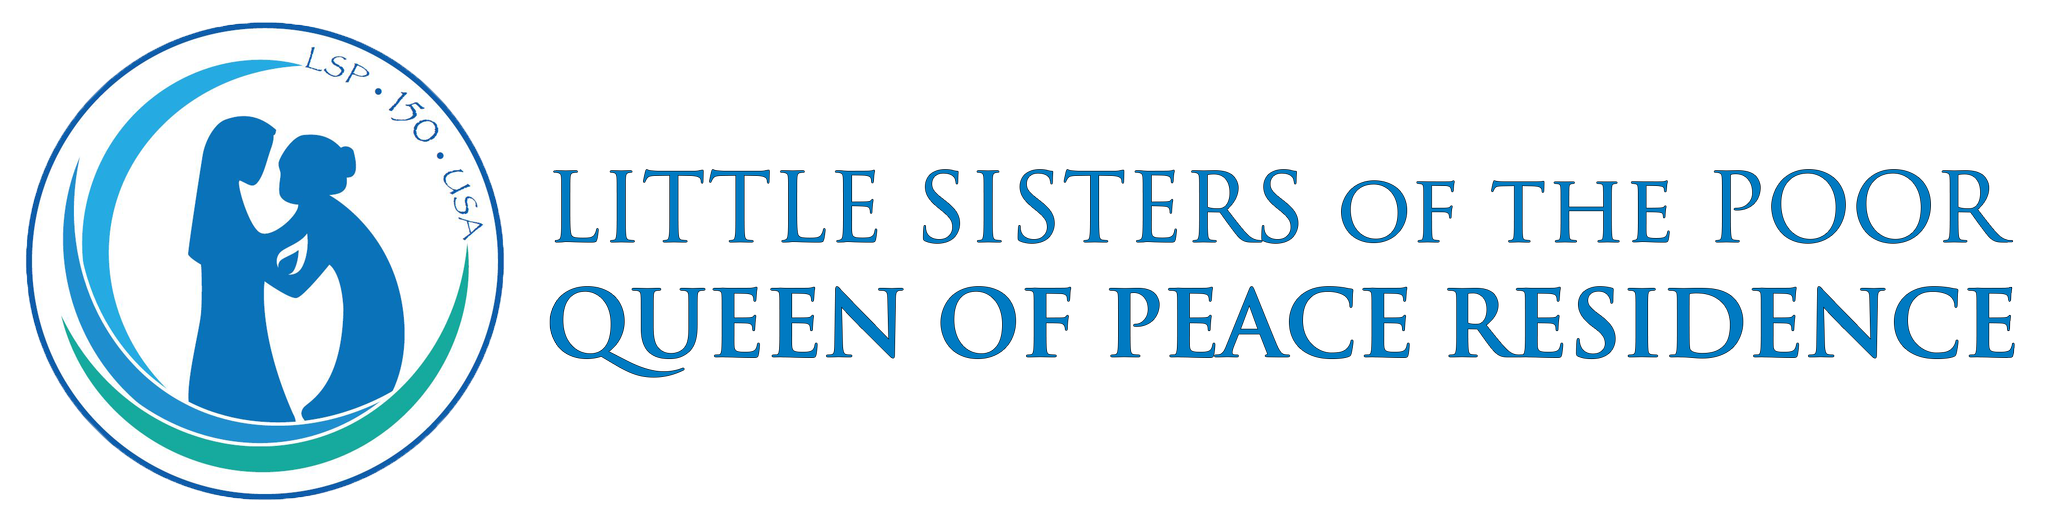 Little Sisters of the Poor Queens